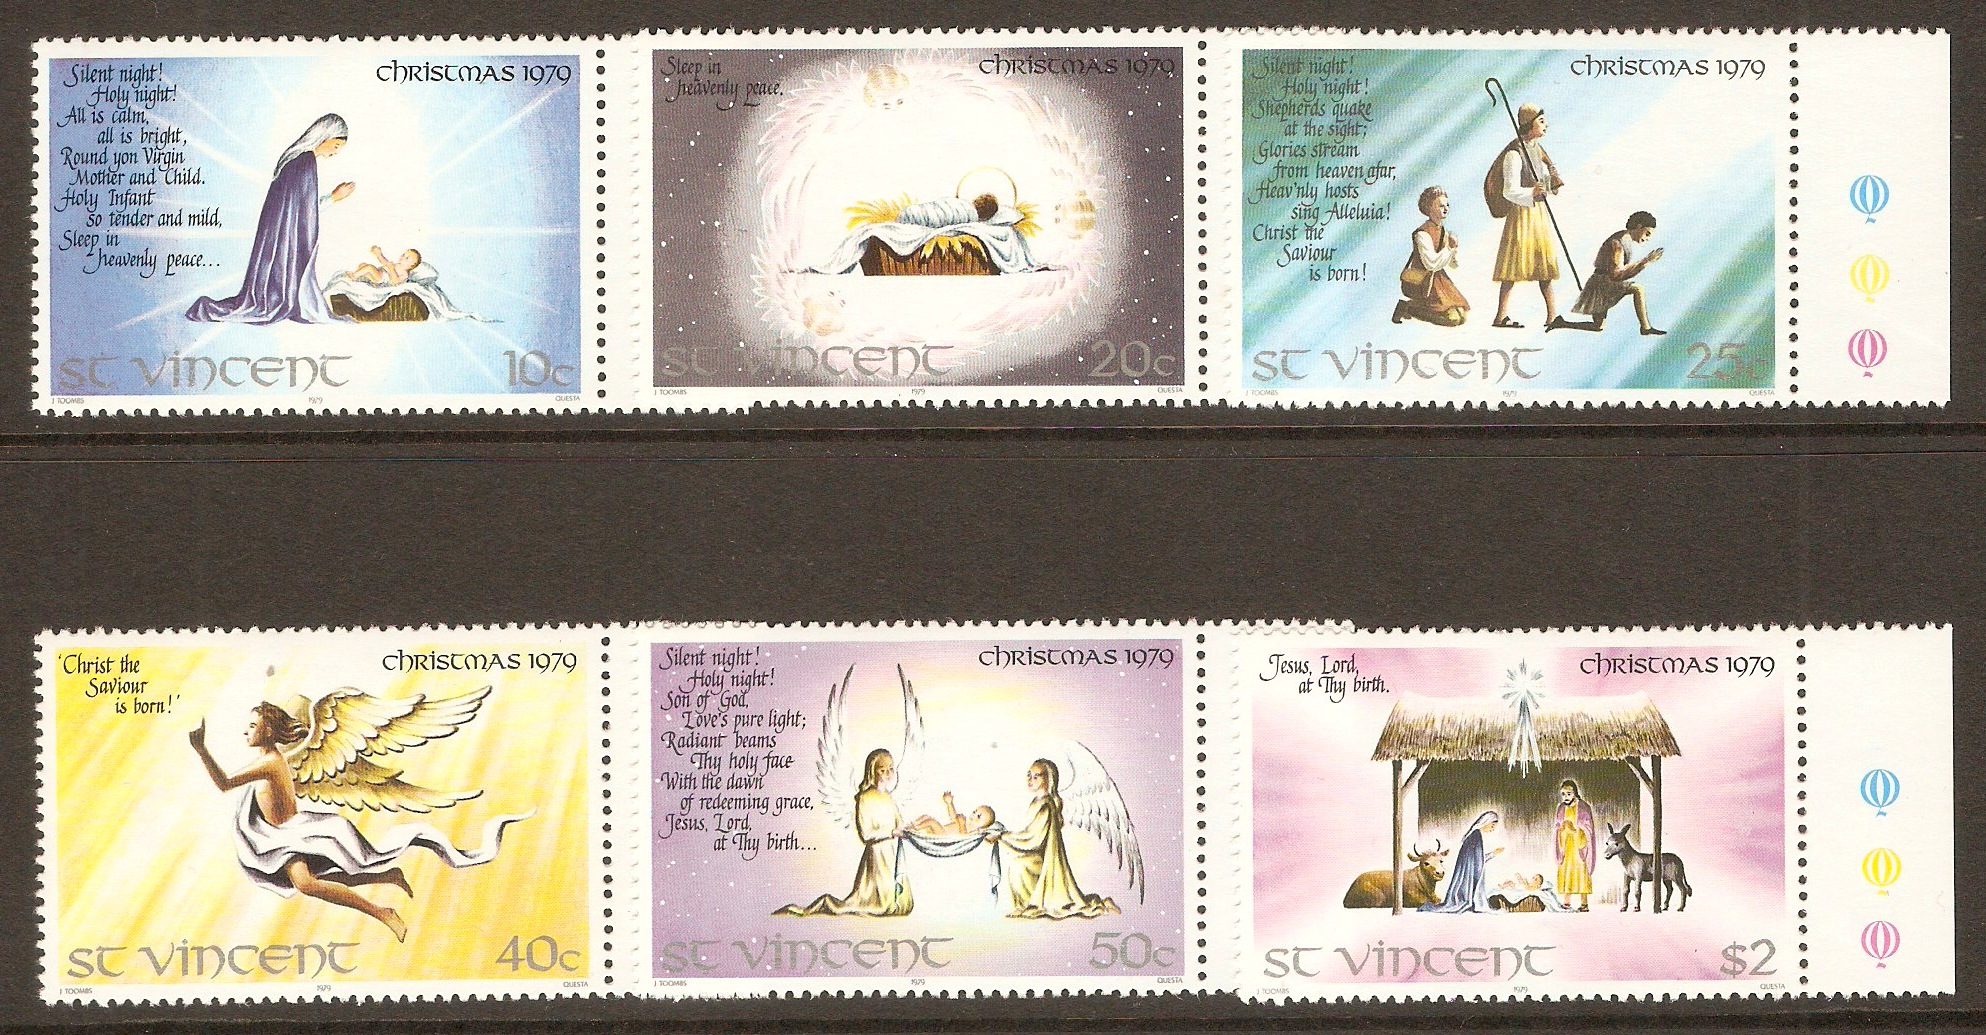 St Vincent 1979 Christmas set. SG621-SG626.